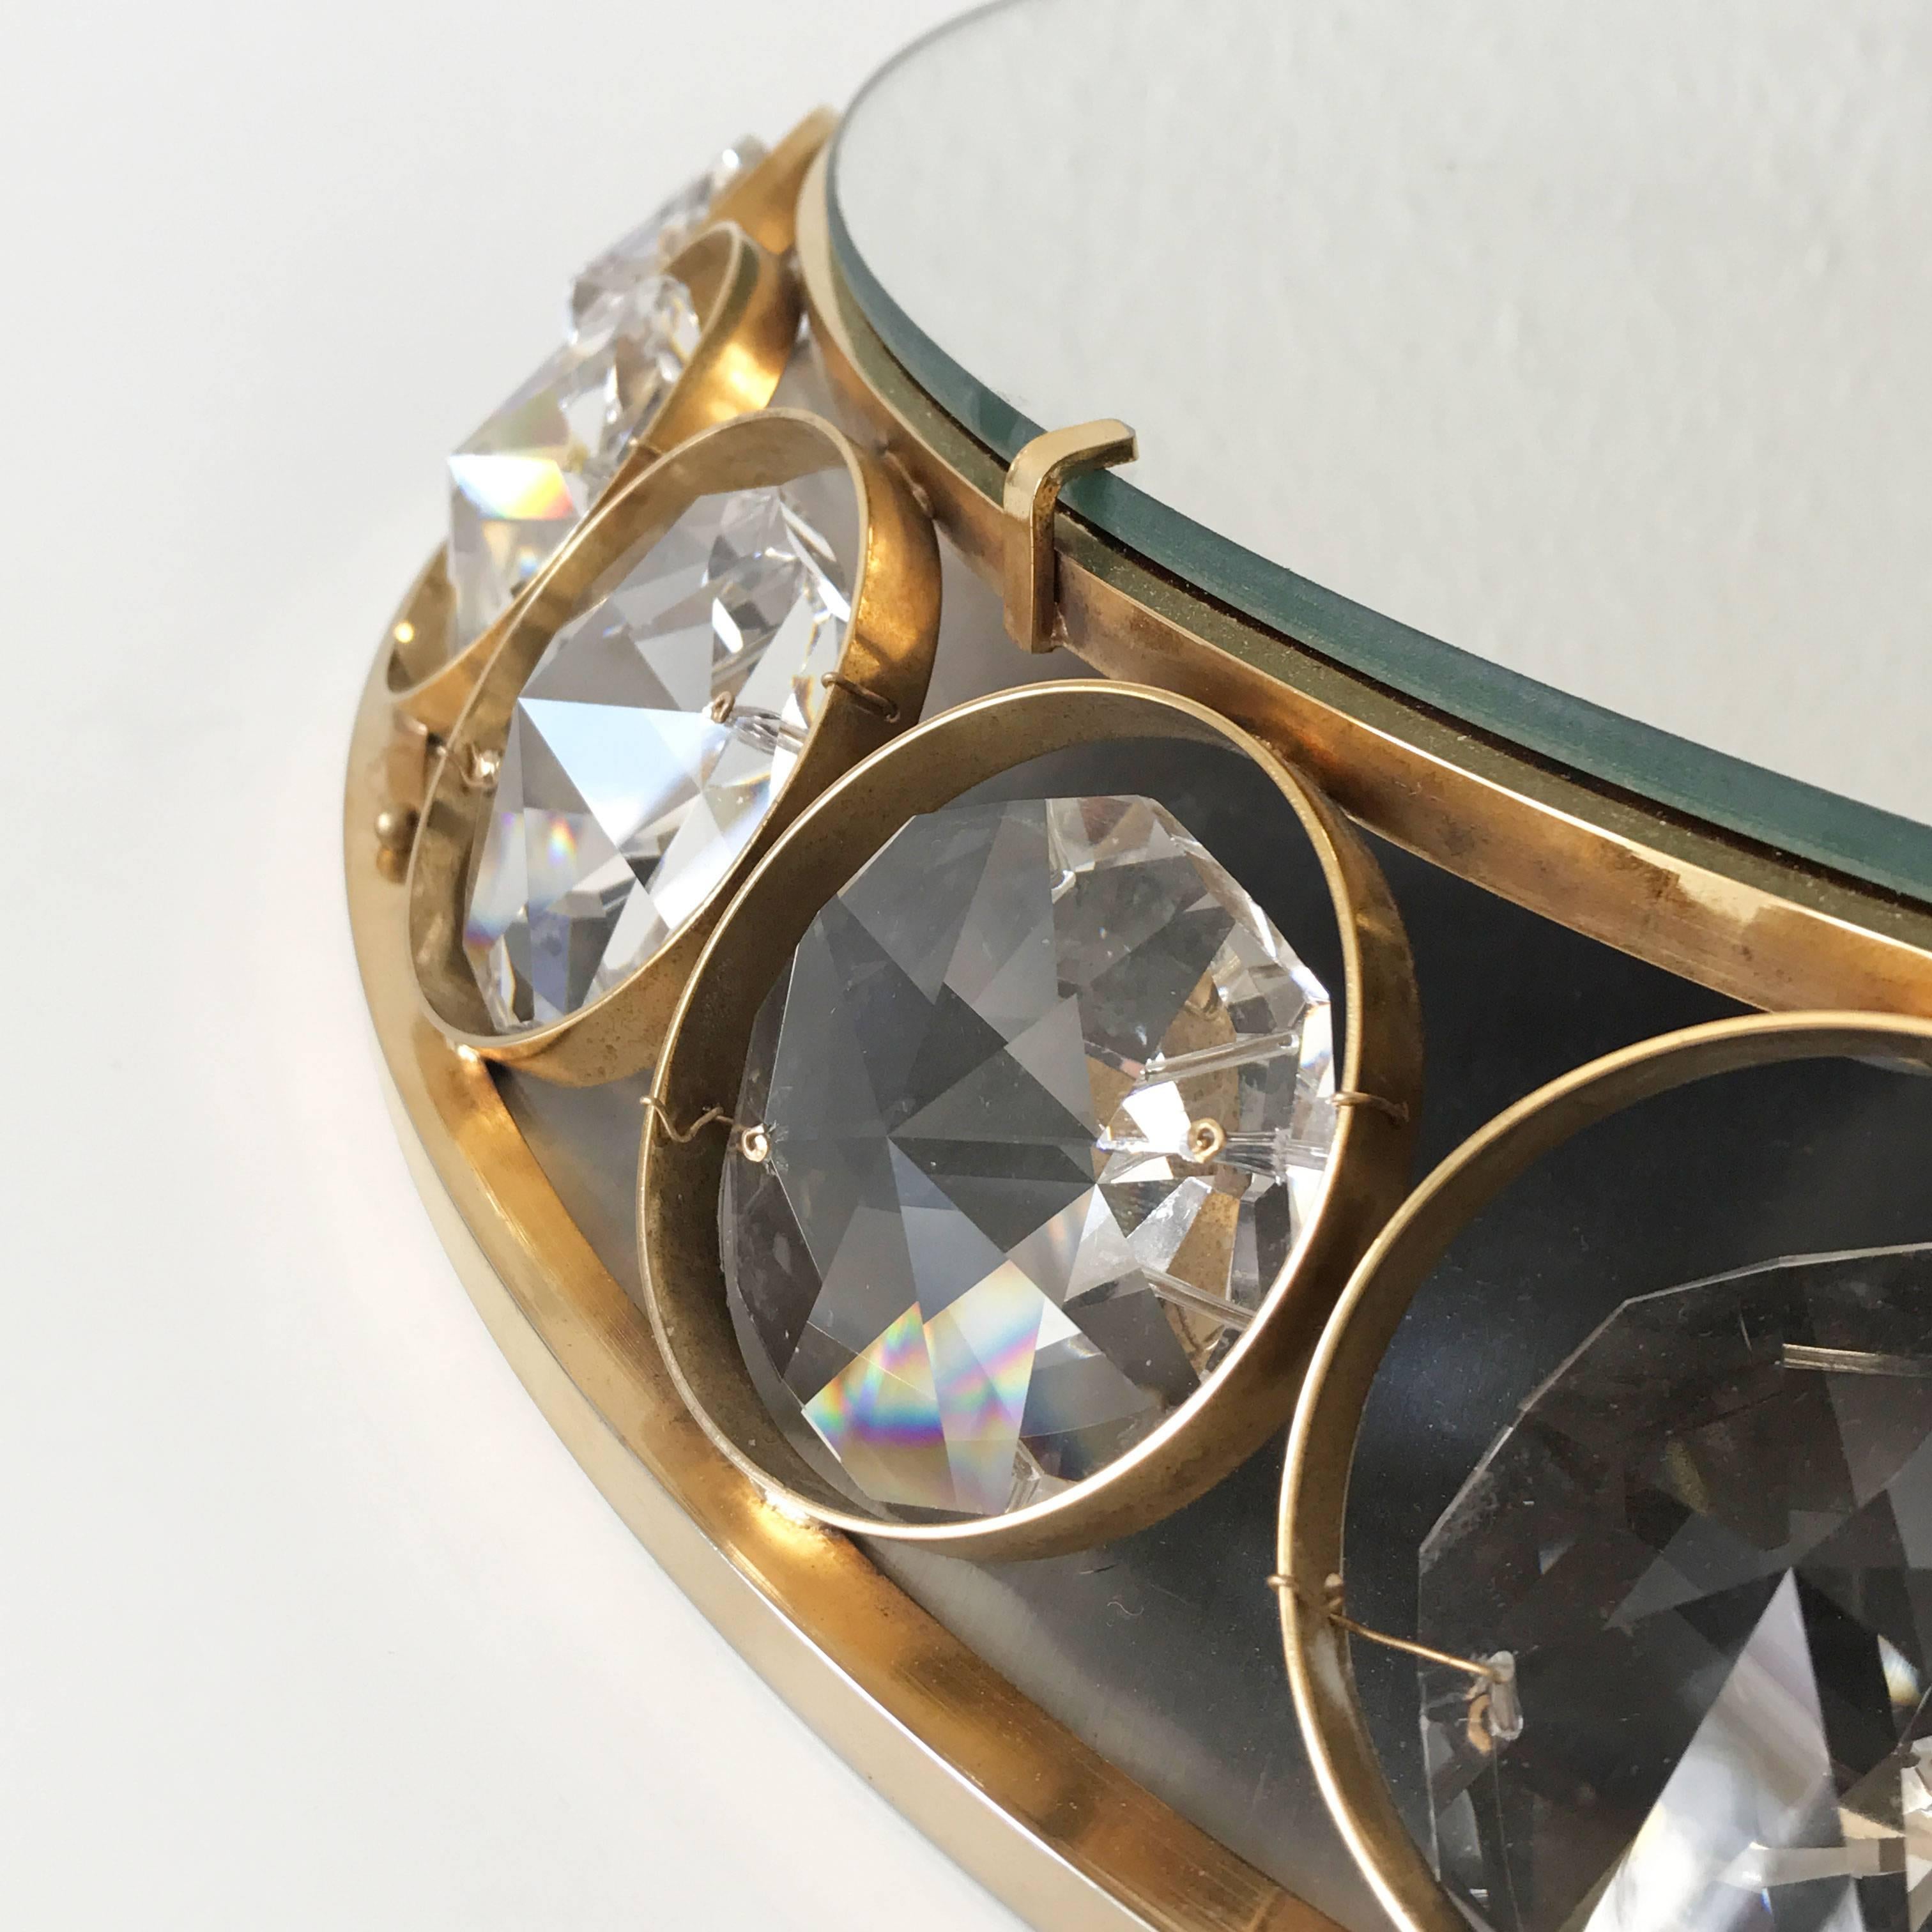 Elegant Mid Century Modern Circular Backlit Wall Mirror by Palwa Germany 1960s For Sale 2